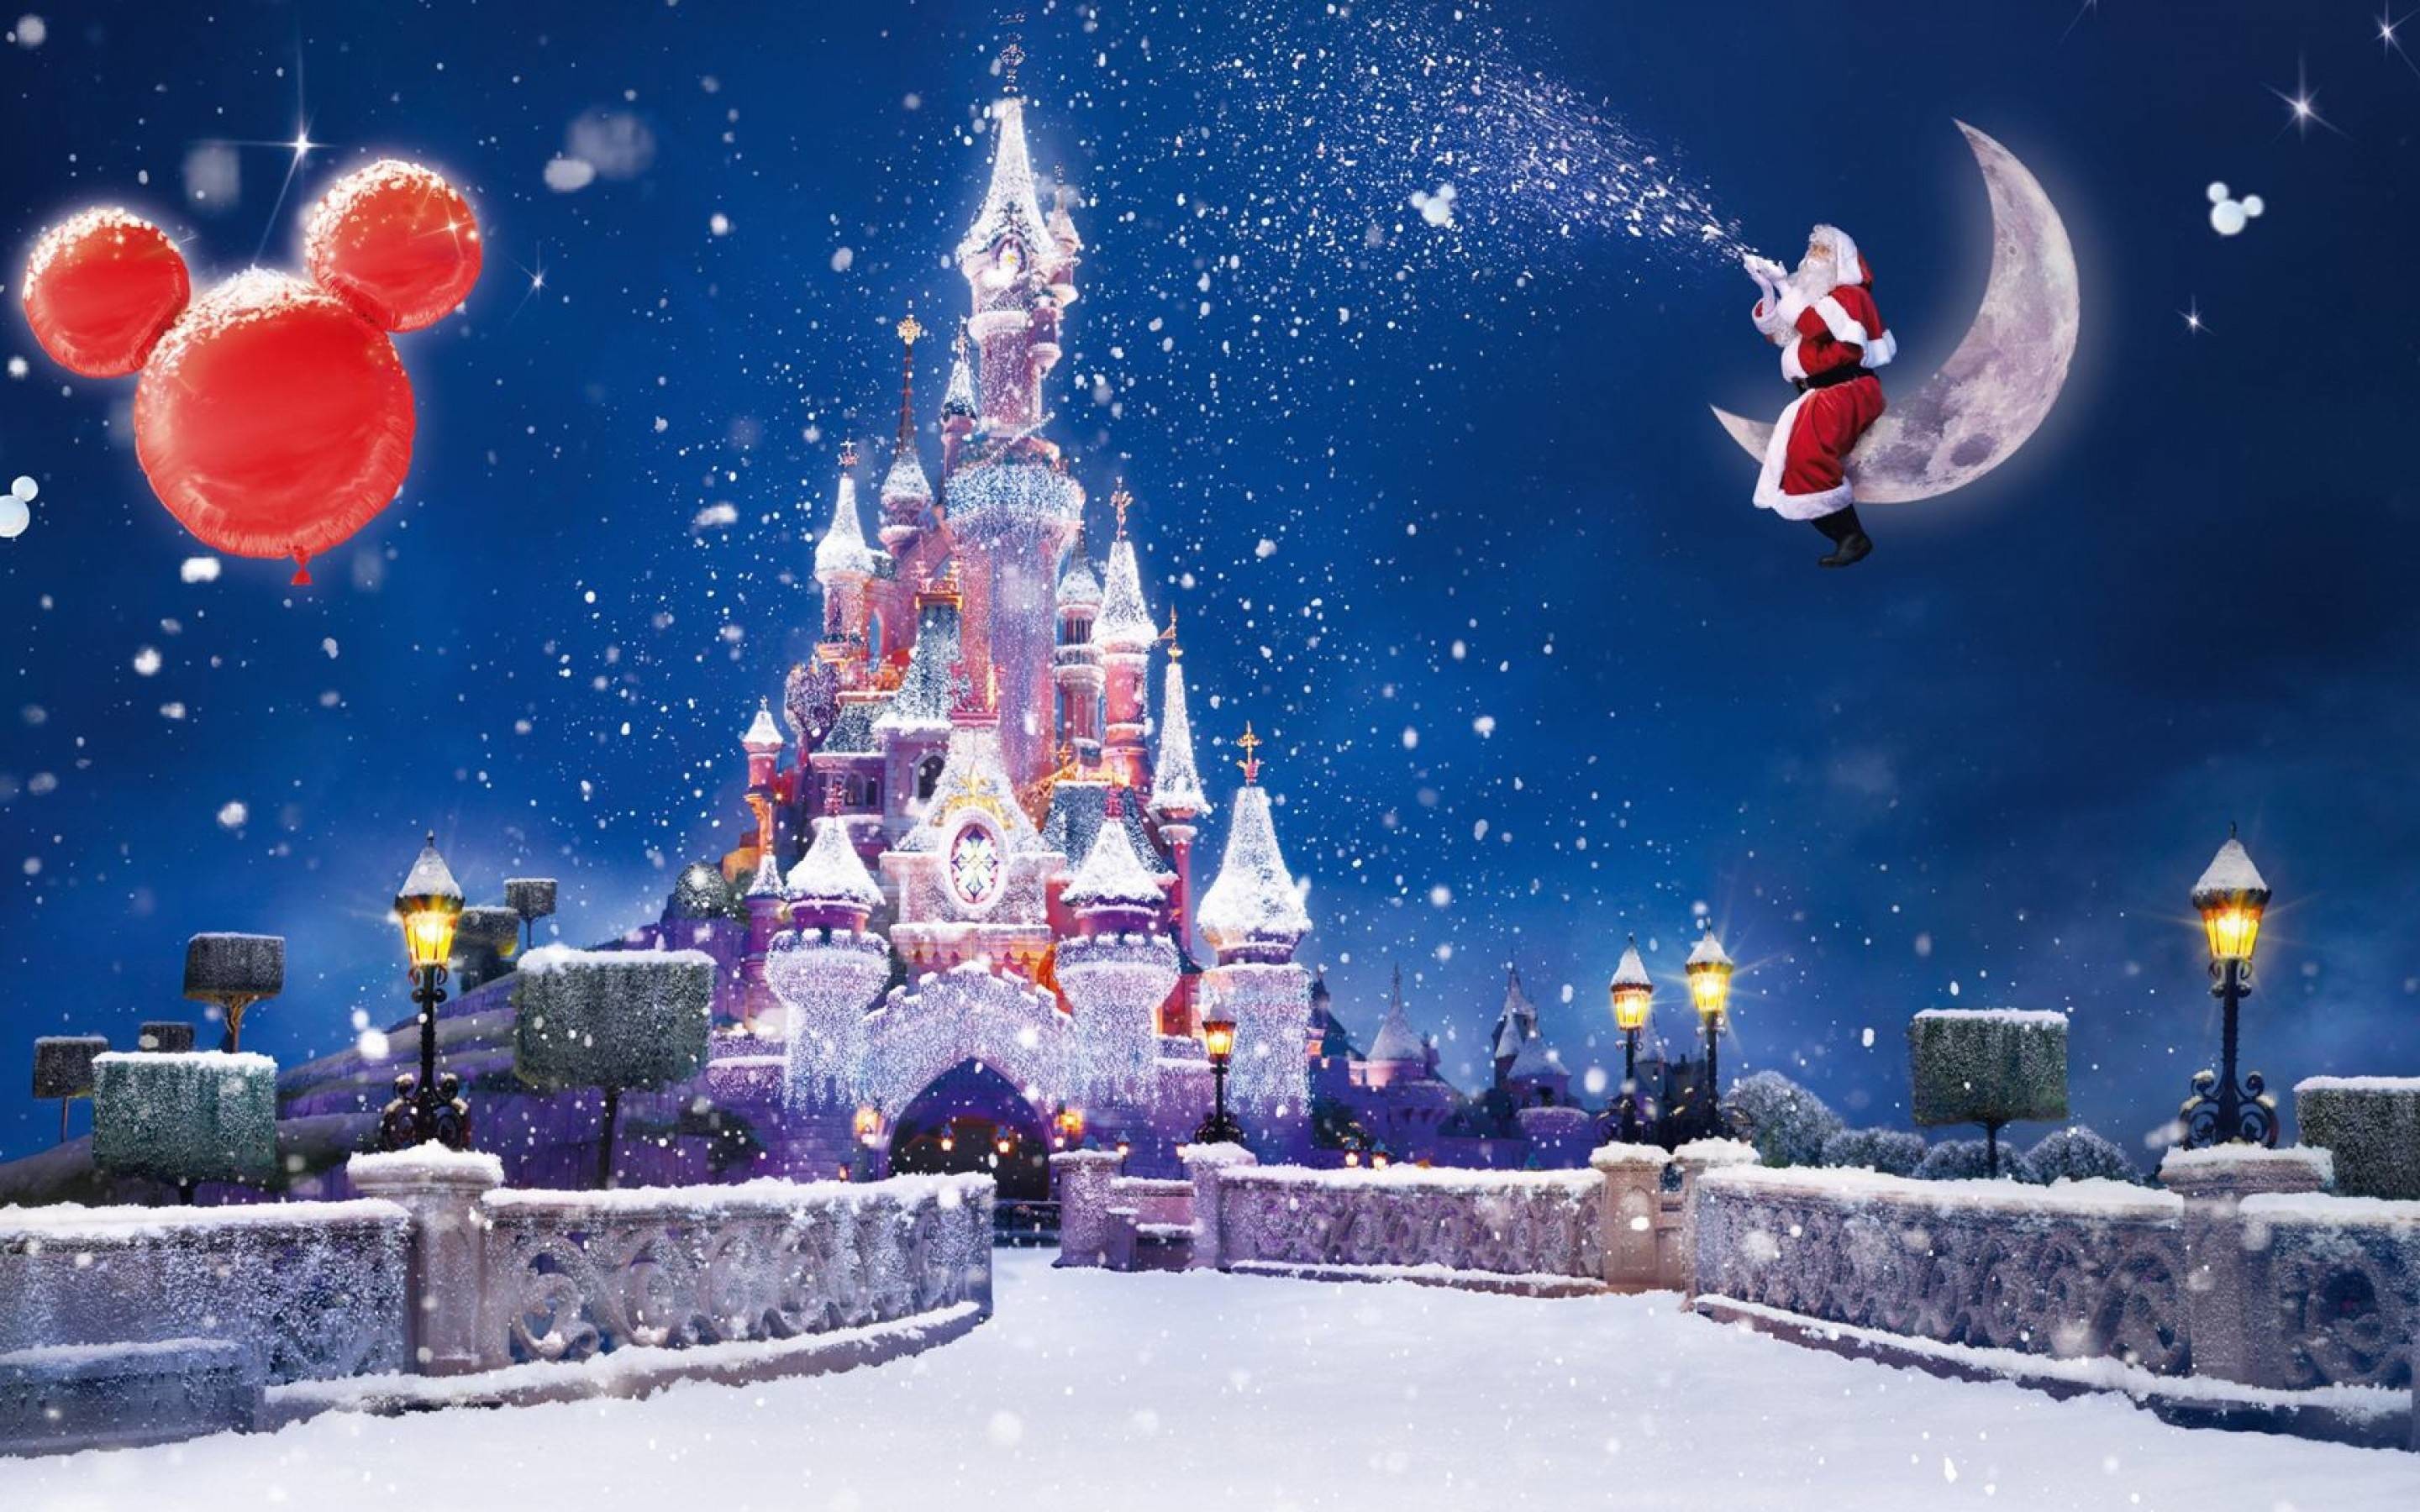 Disney Christmas Wallpaper Image